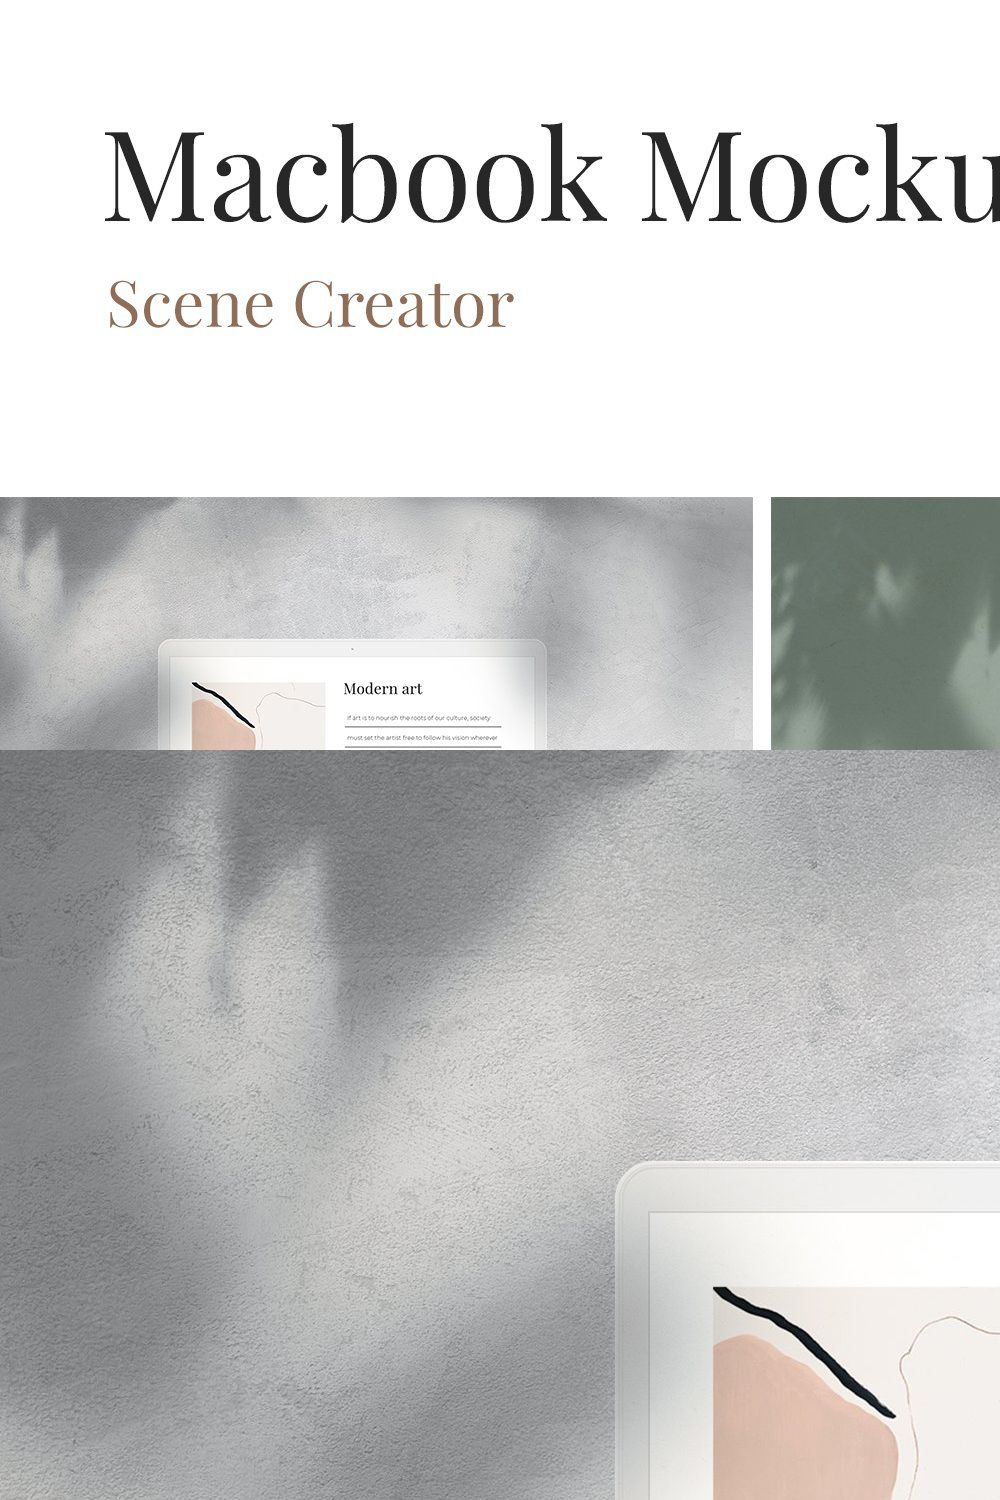 Macbook mockups - Scene creator pinterest preview image.